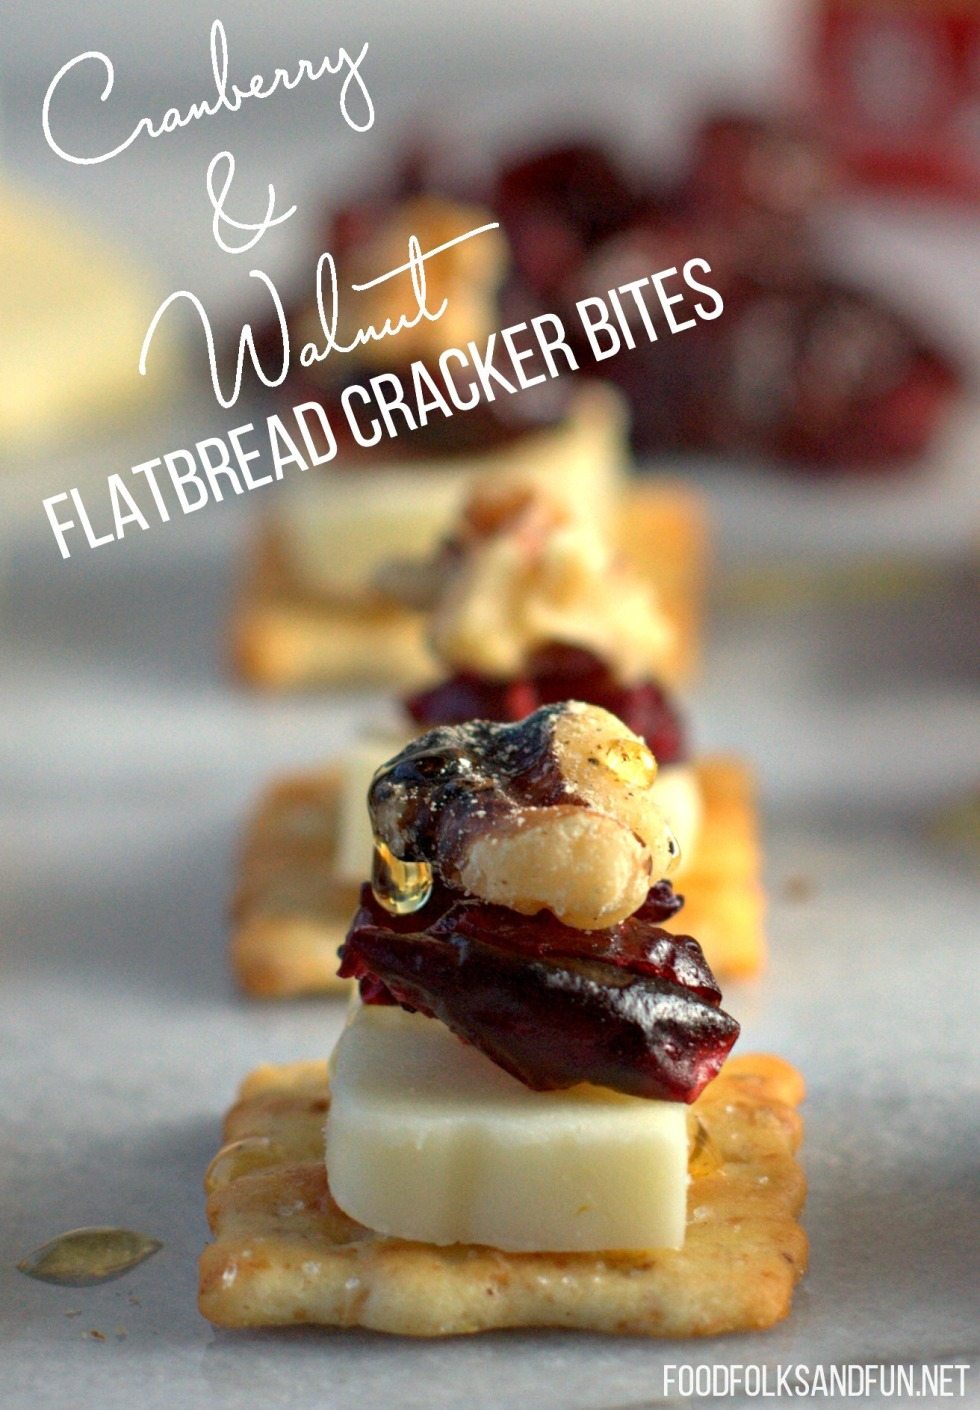 Cranberry-Walnut Flatbread Cracker Bites 5